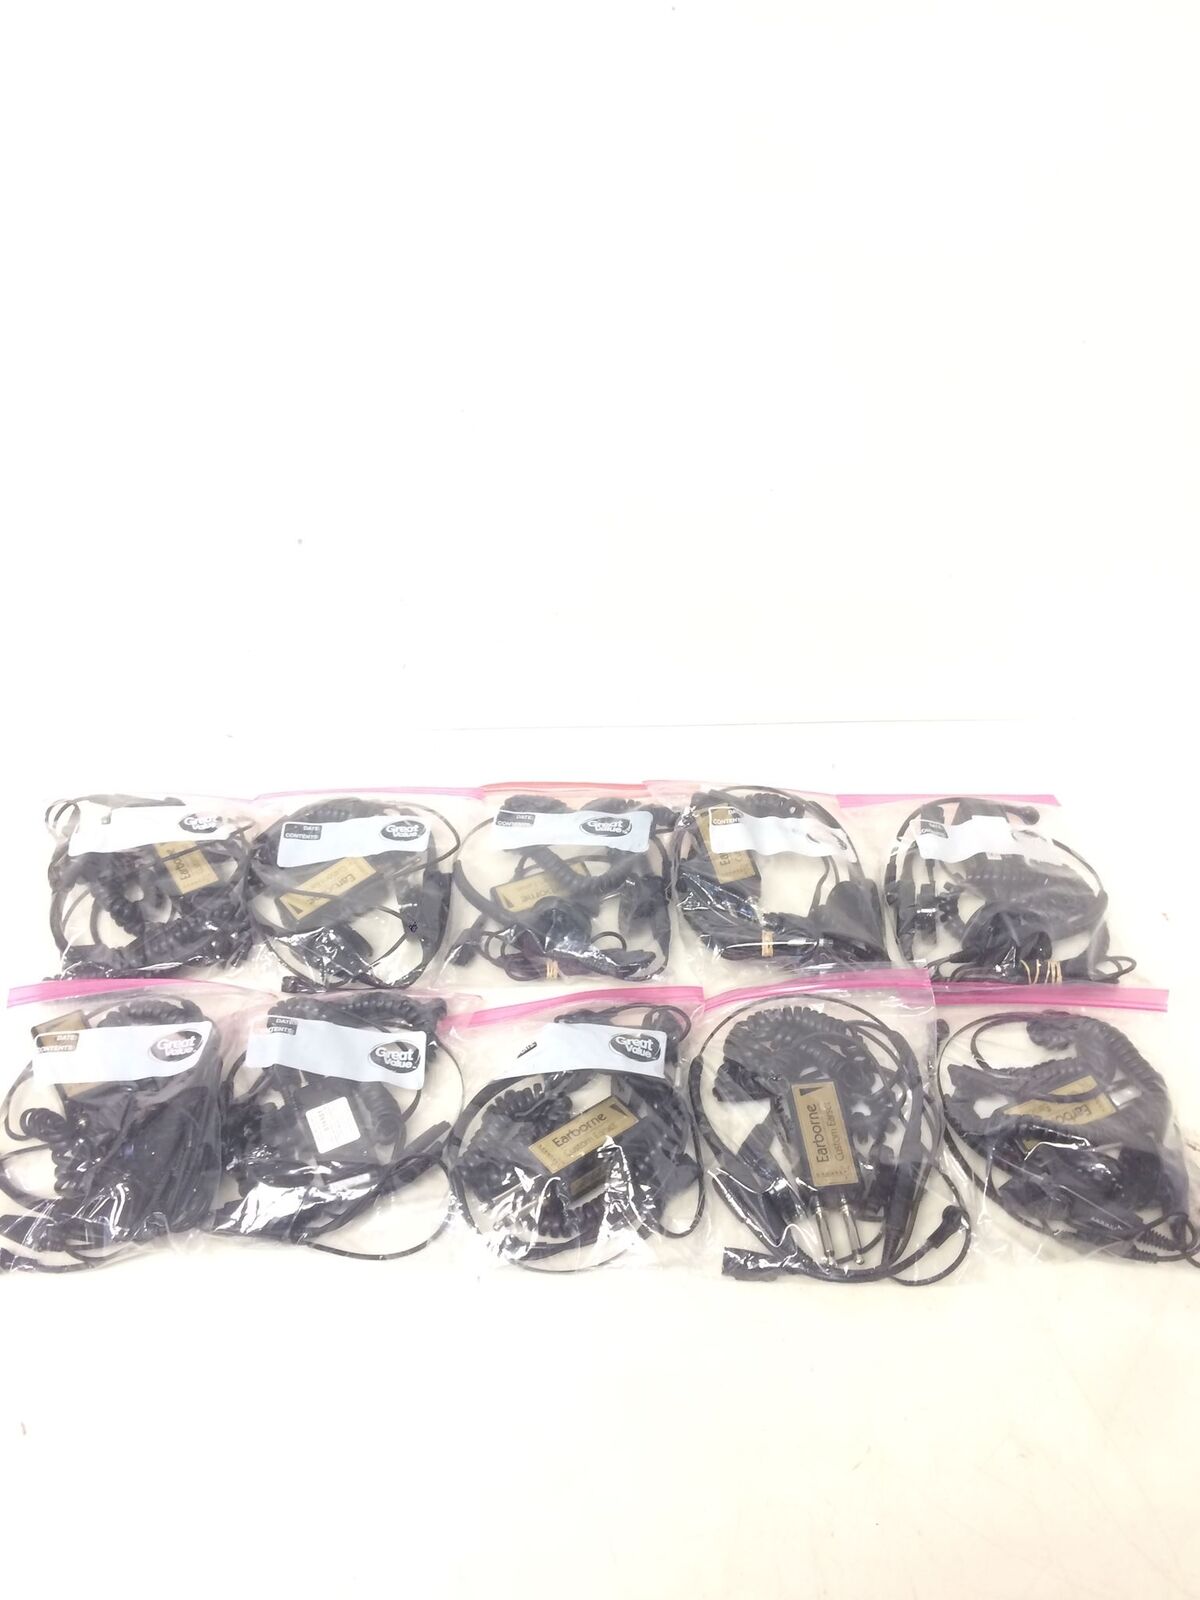 Lot of 60 NEW STARKEY Earborne Custom Headset with Transmitter GP-CX w/Ear muffs